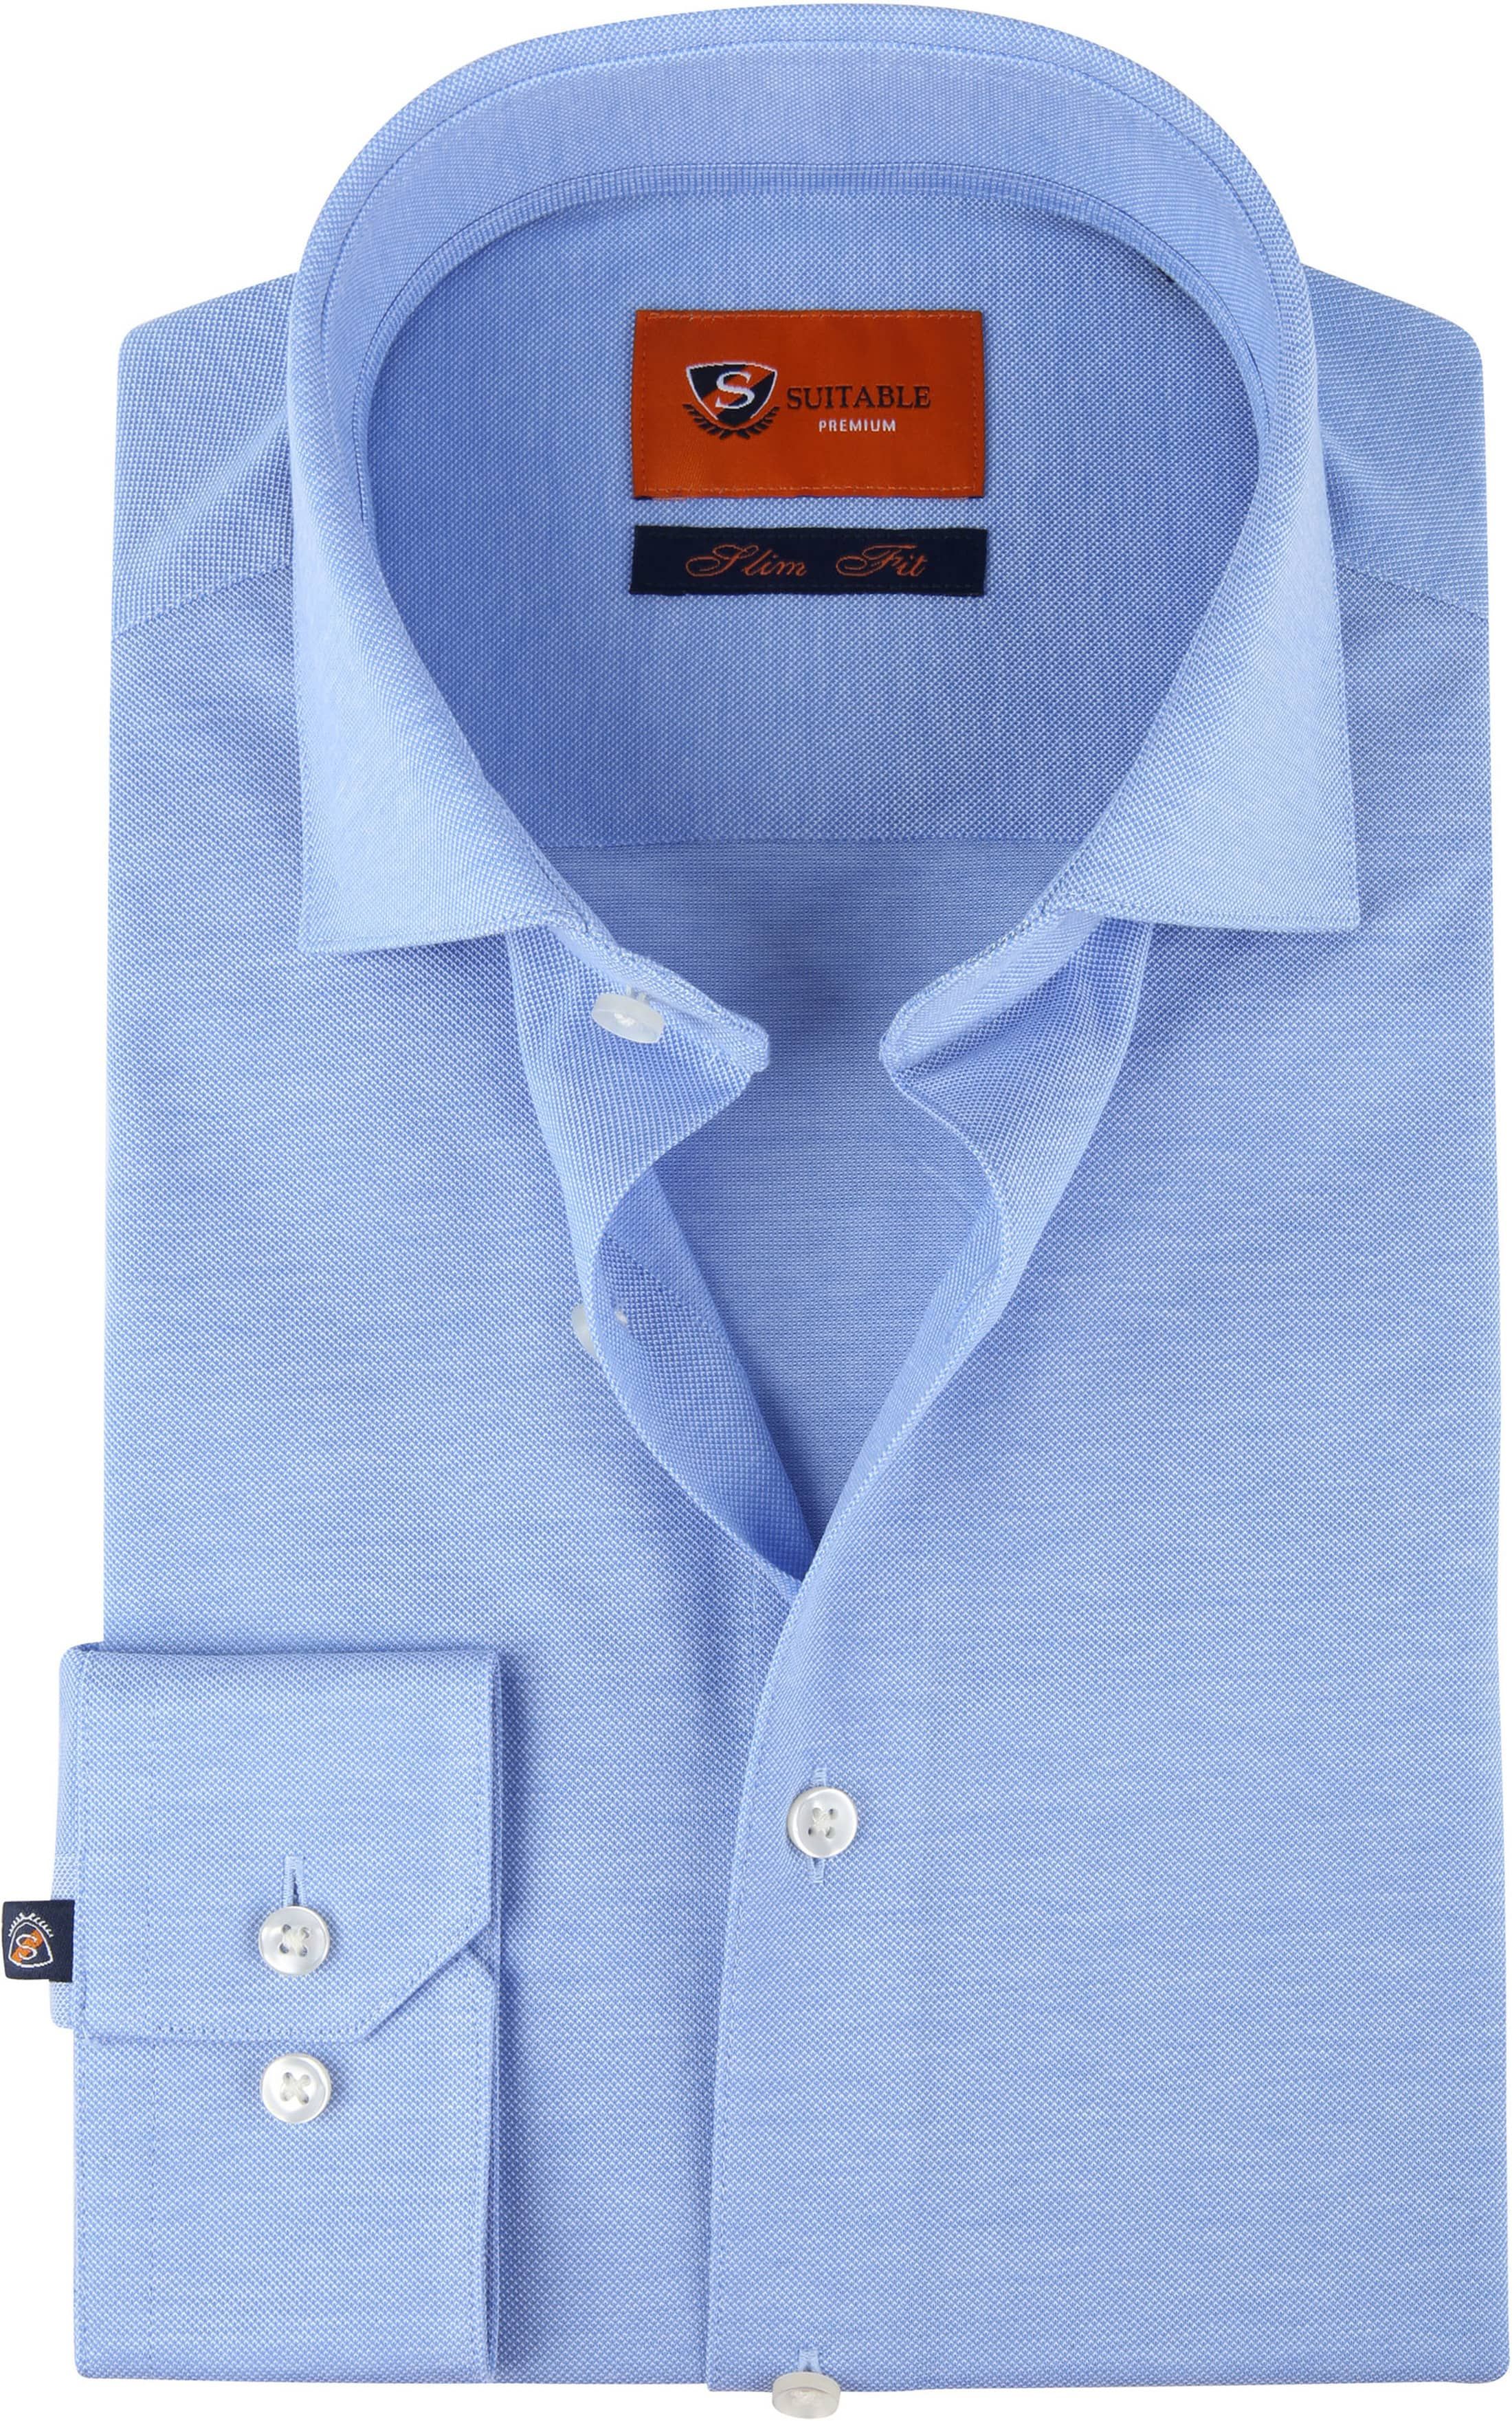 Suitable Jersey Shirt Light Blue size 15